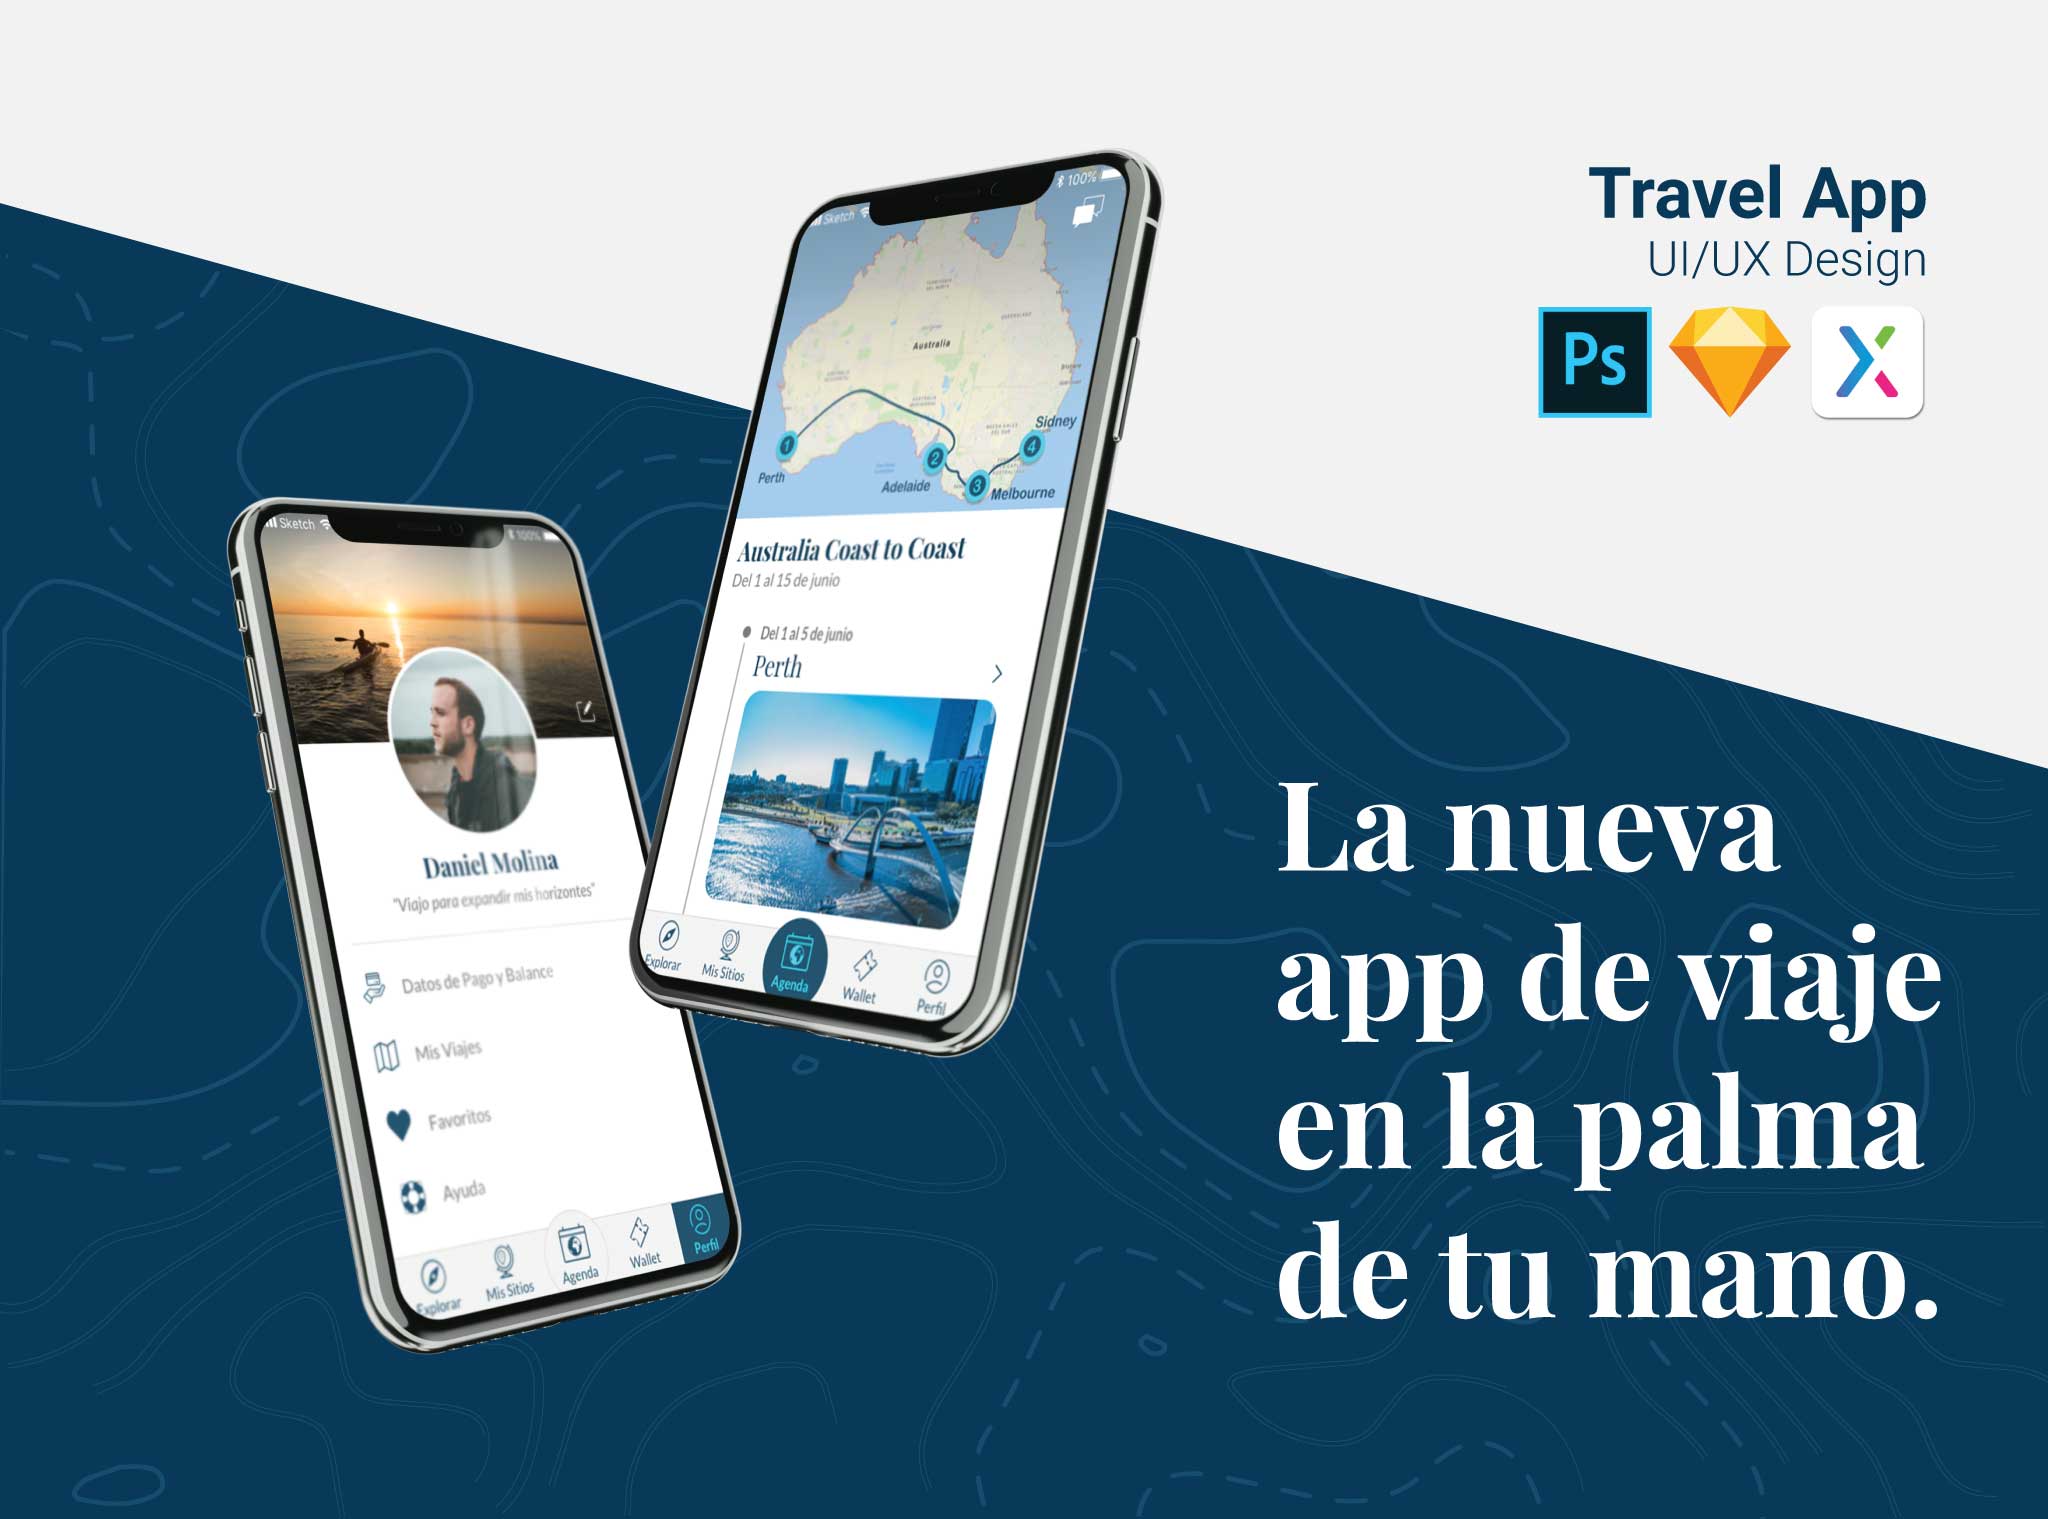 Travel Agency – App